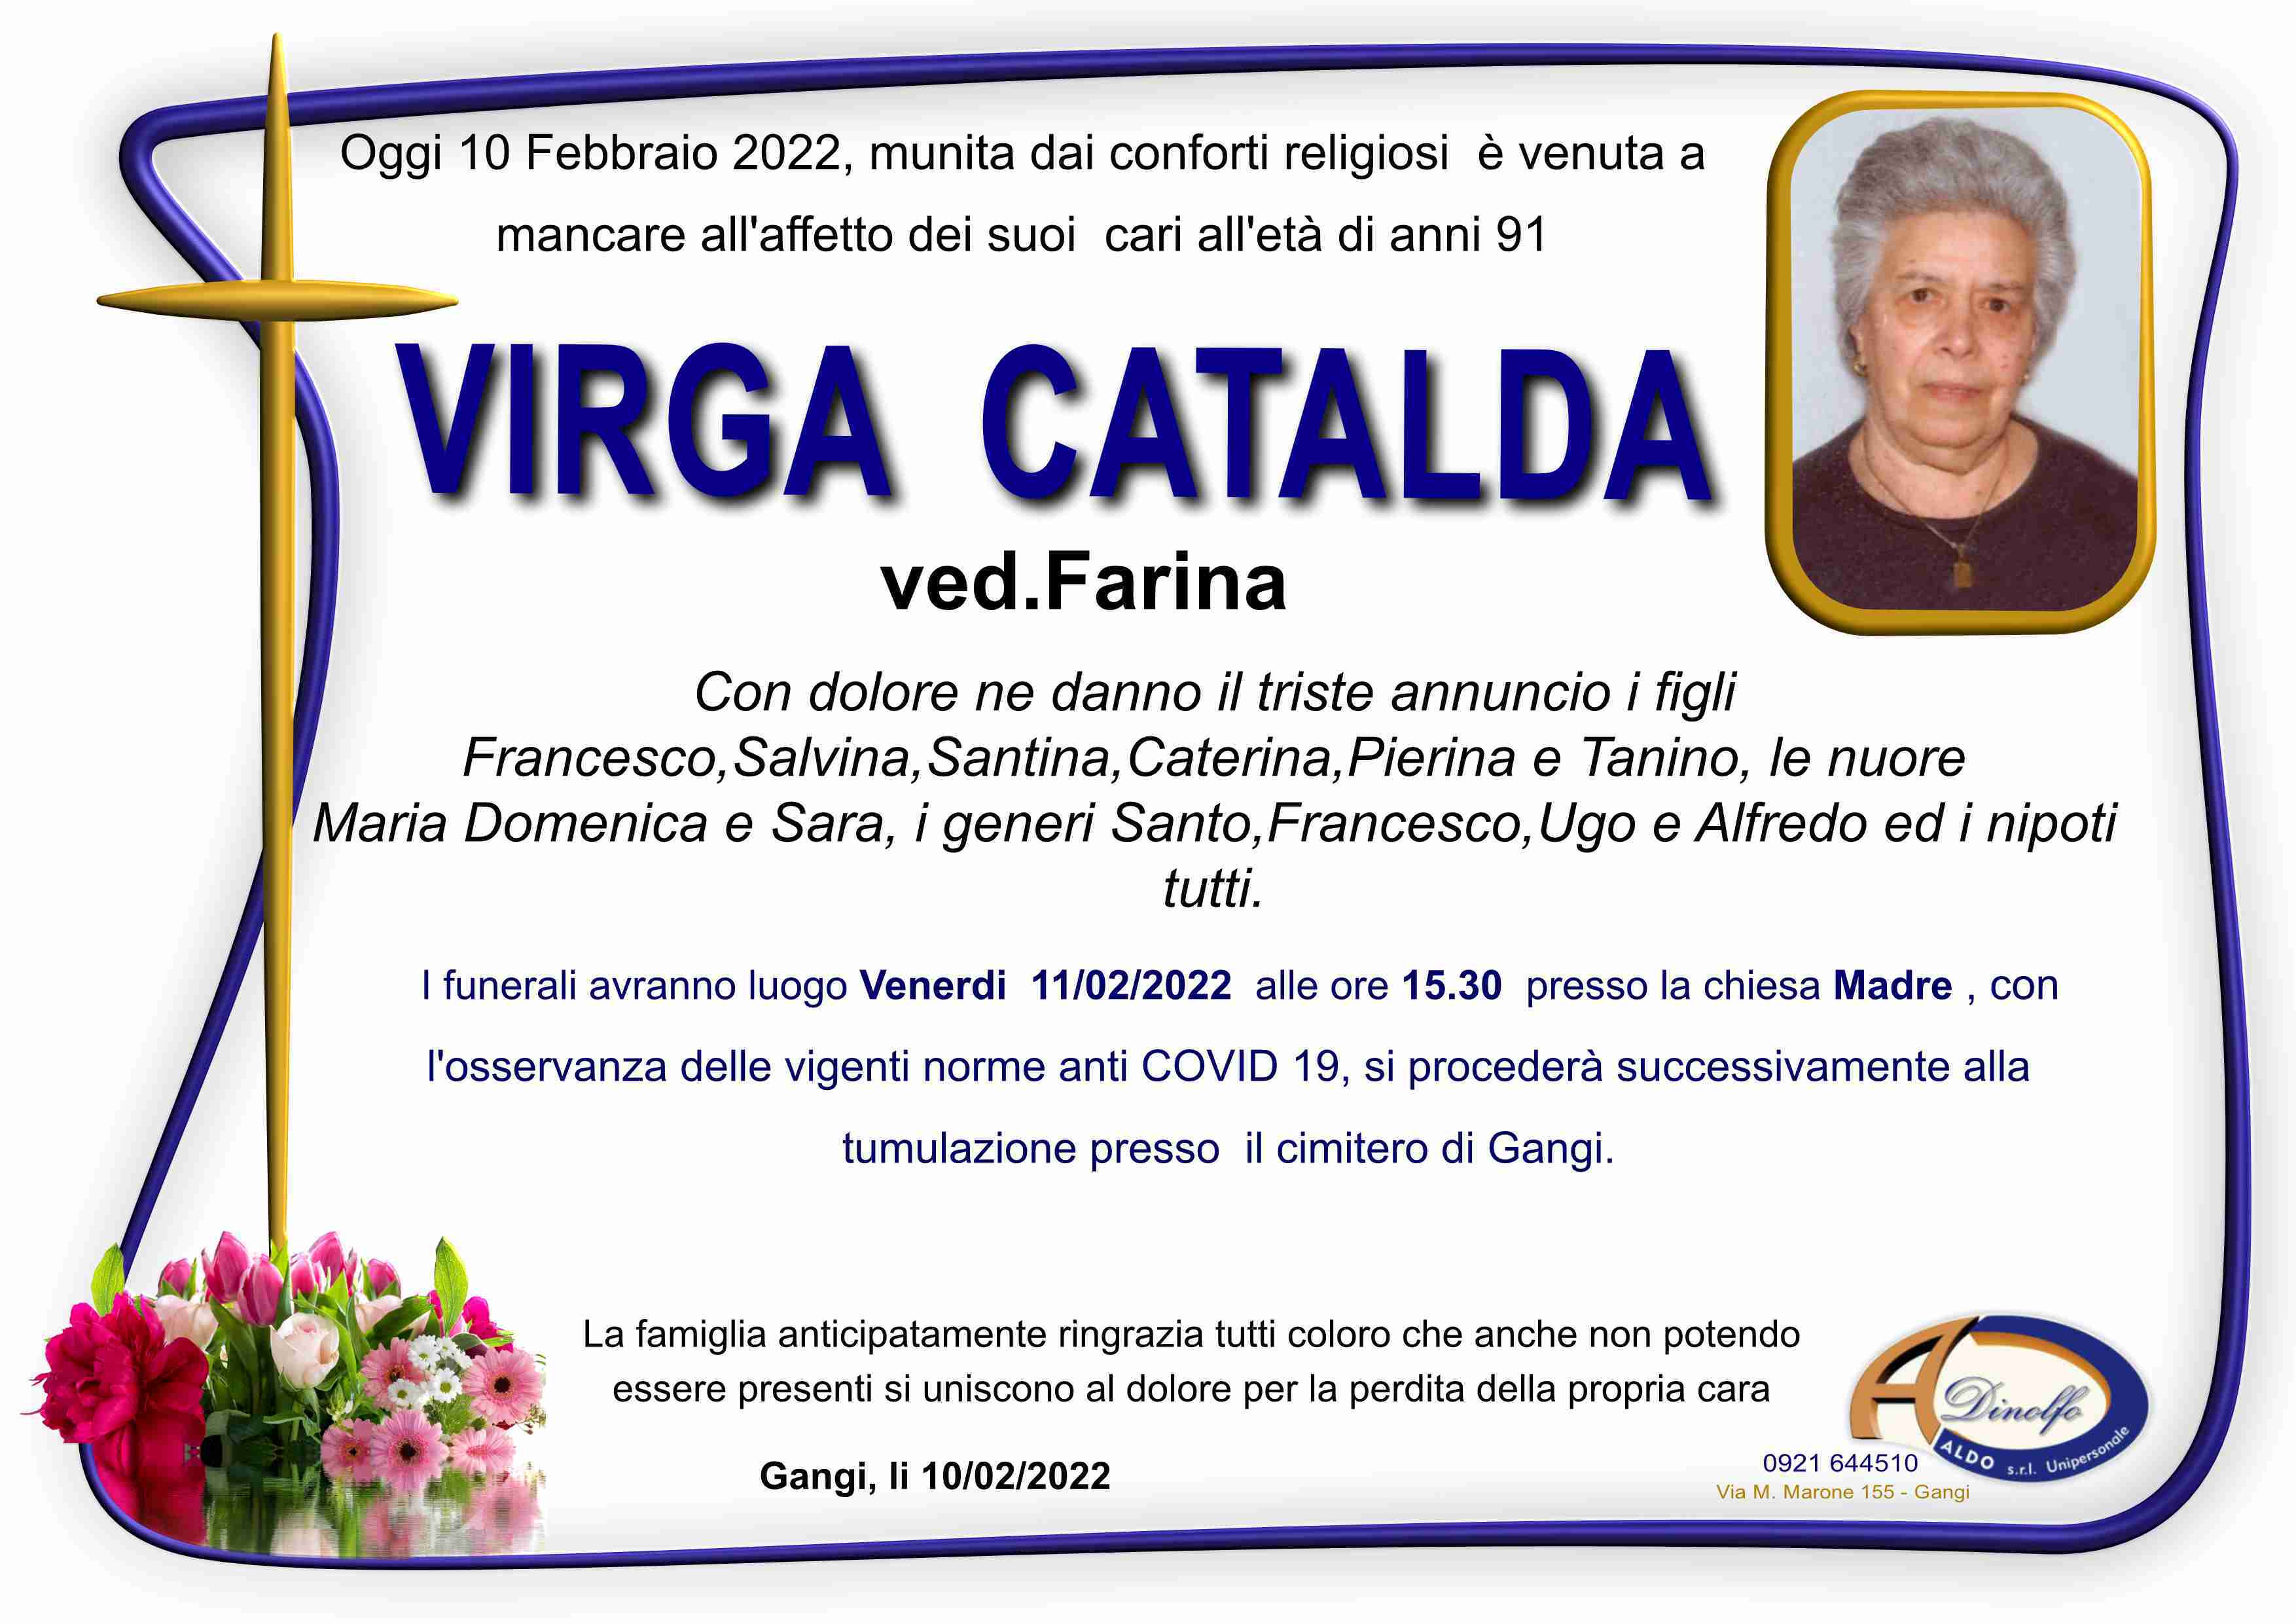 Catalda Virga